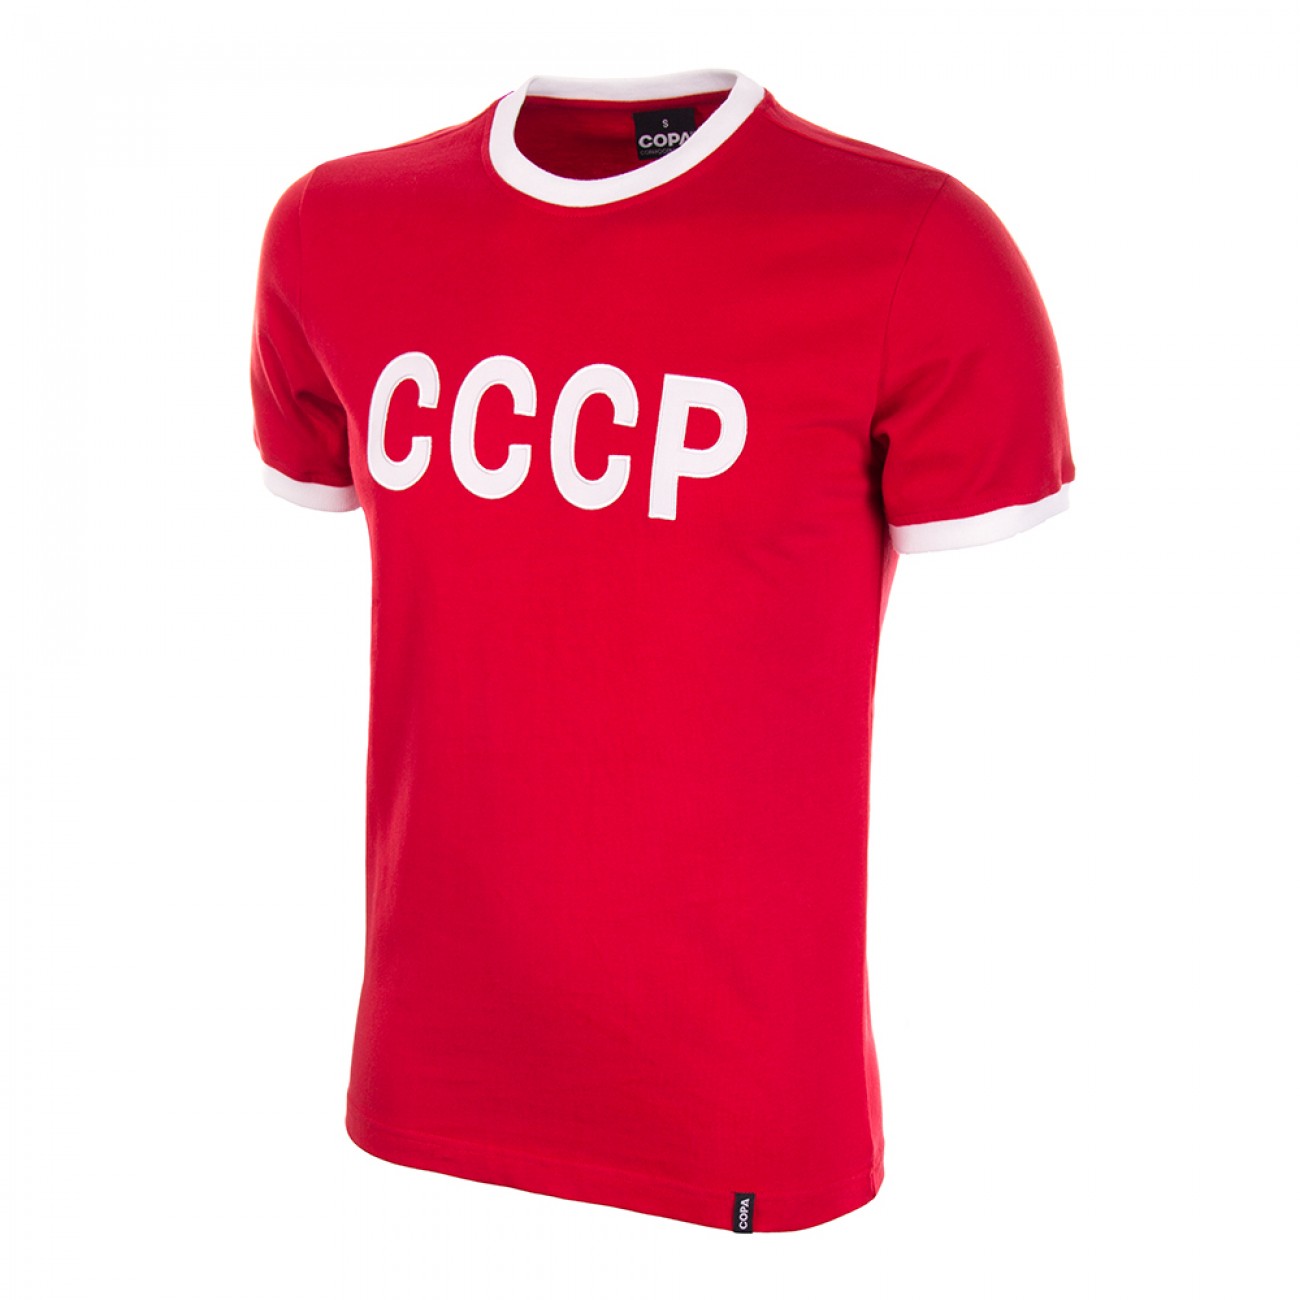 Soviet Union CCCP USSR 1970's Retro Football Shirt Classic Vintage Men Top 